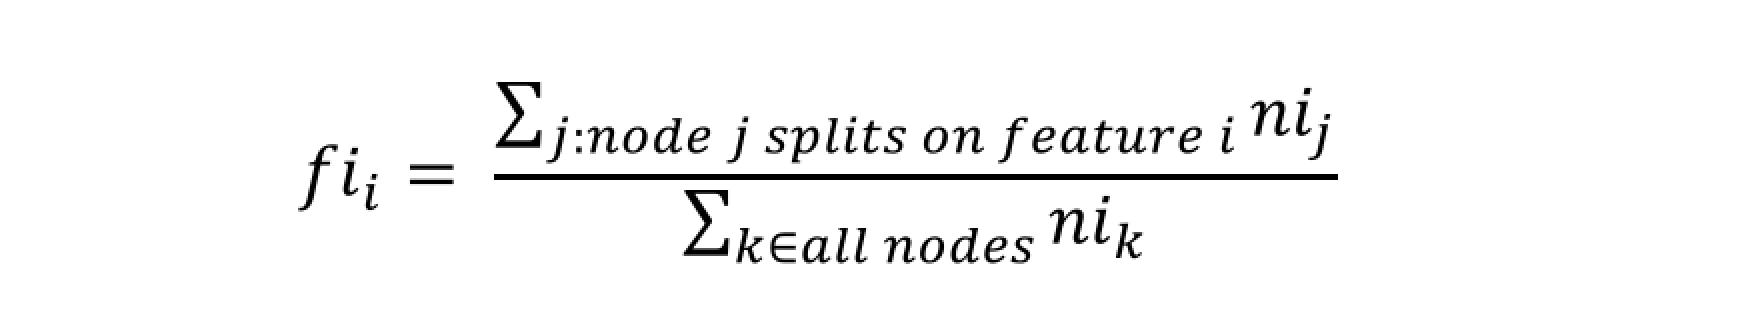 node - splits